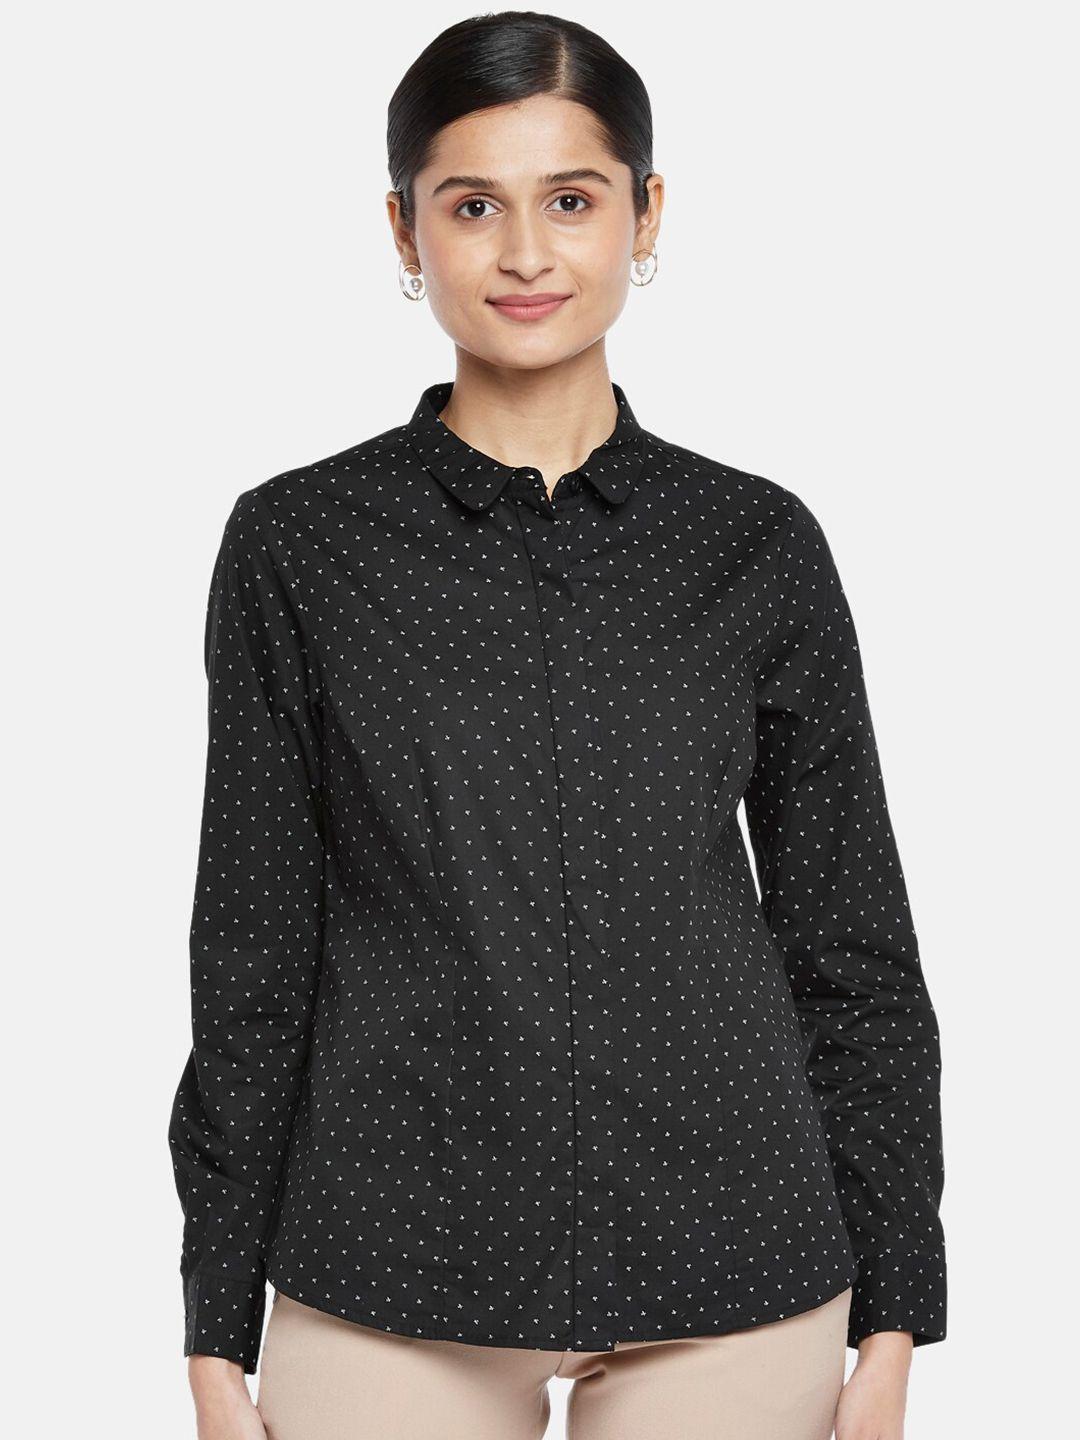 annabelle by pantaloons women black polka dots printed shirt style top